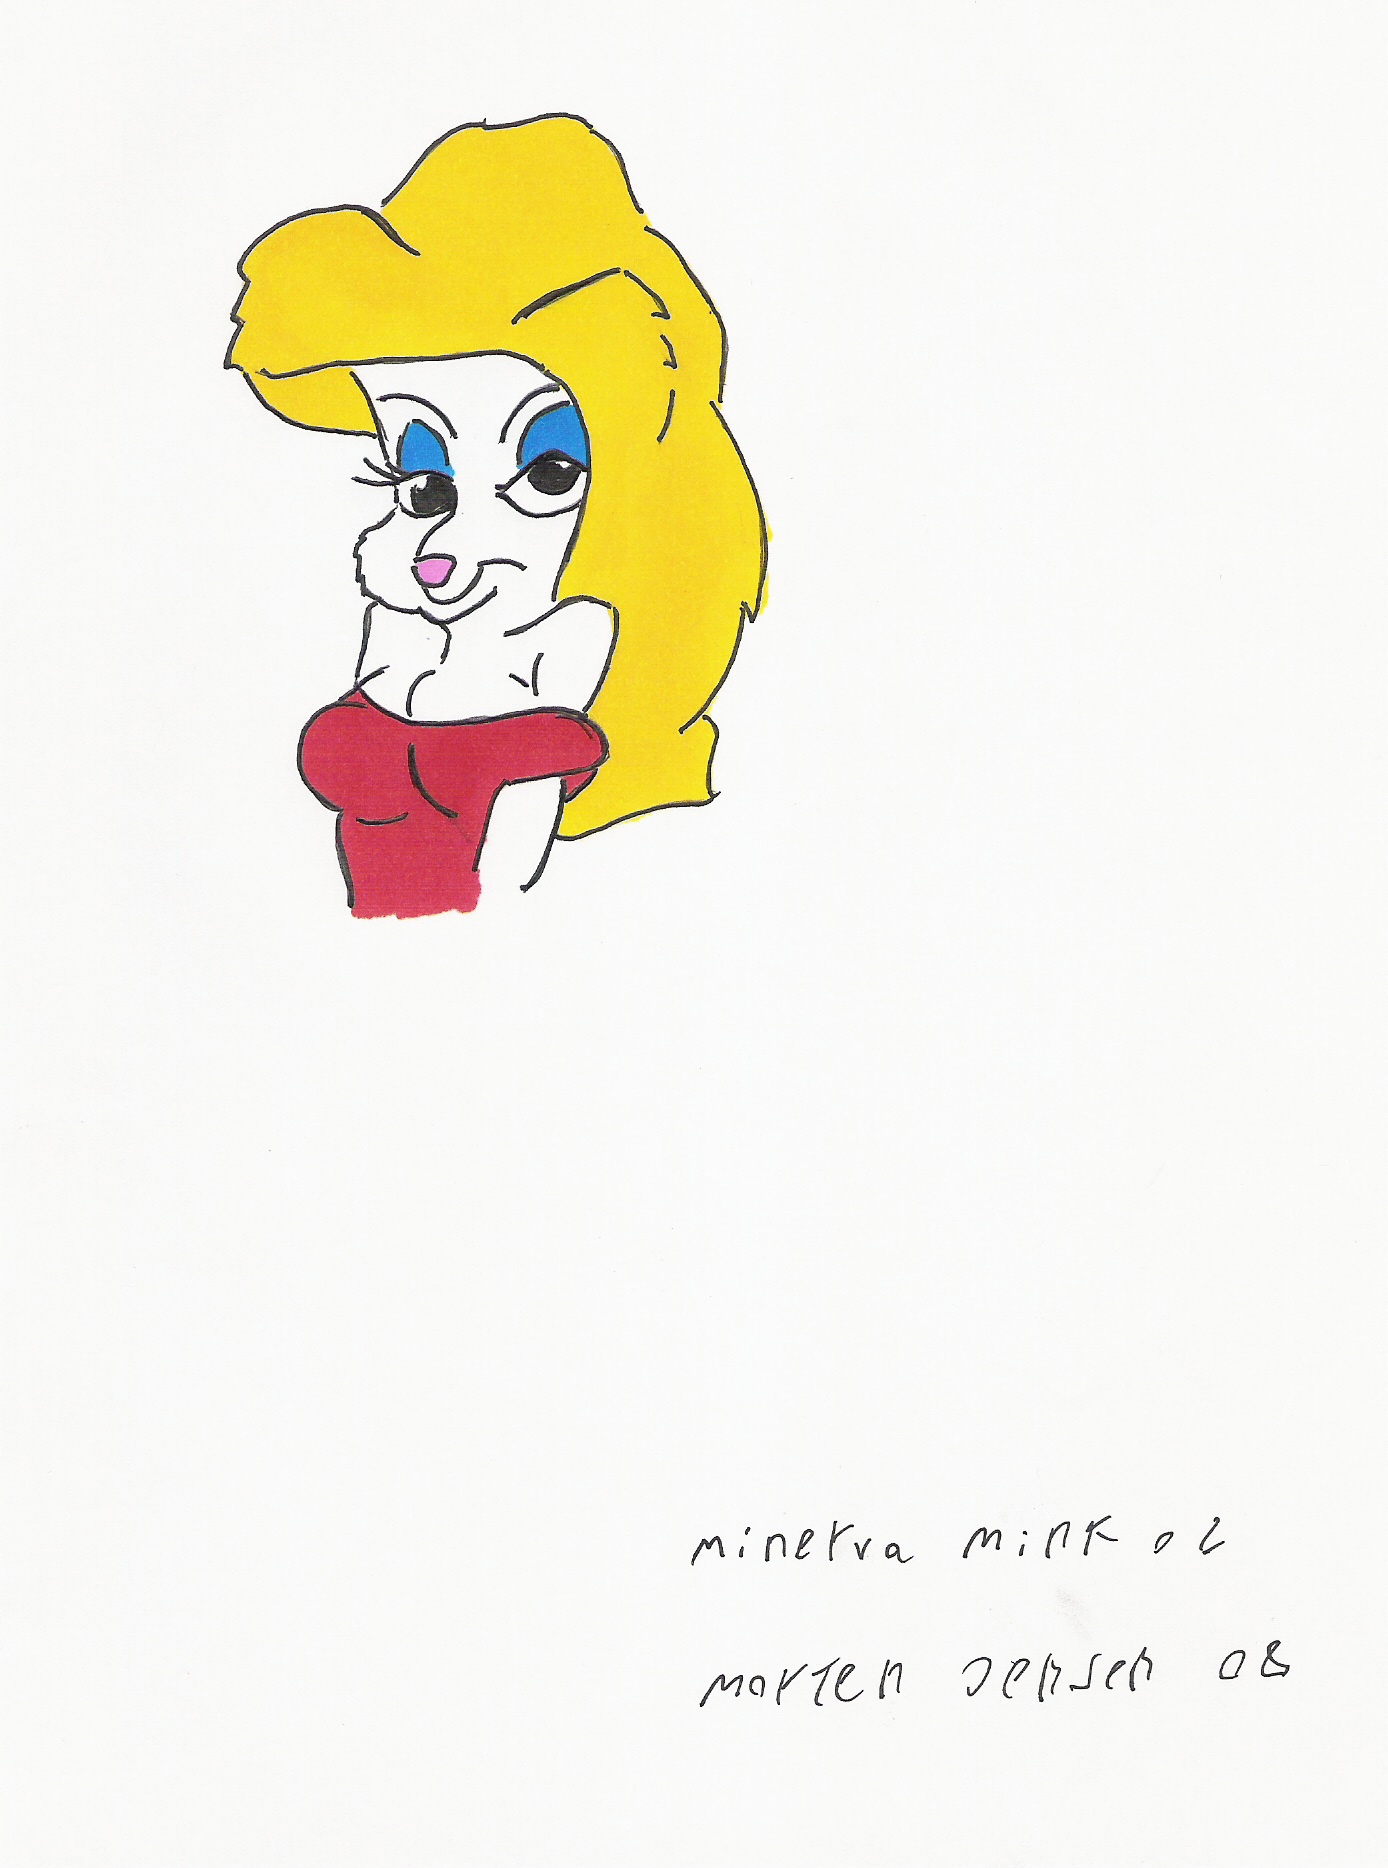 Minerva Mink02 by mj